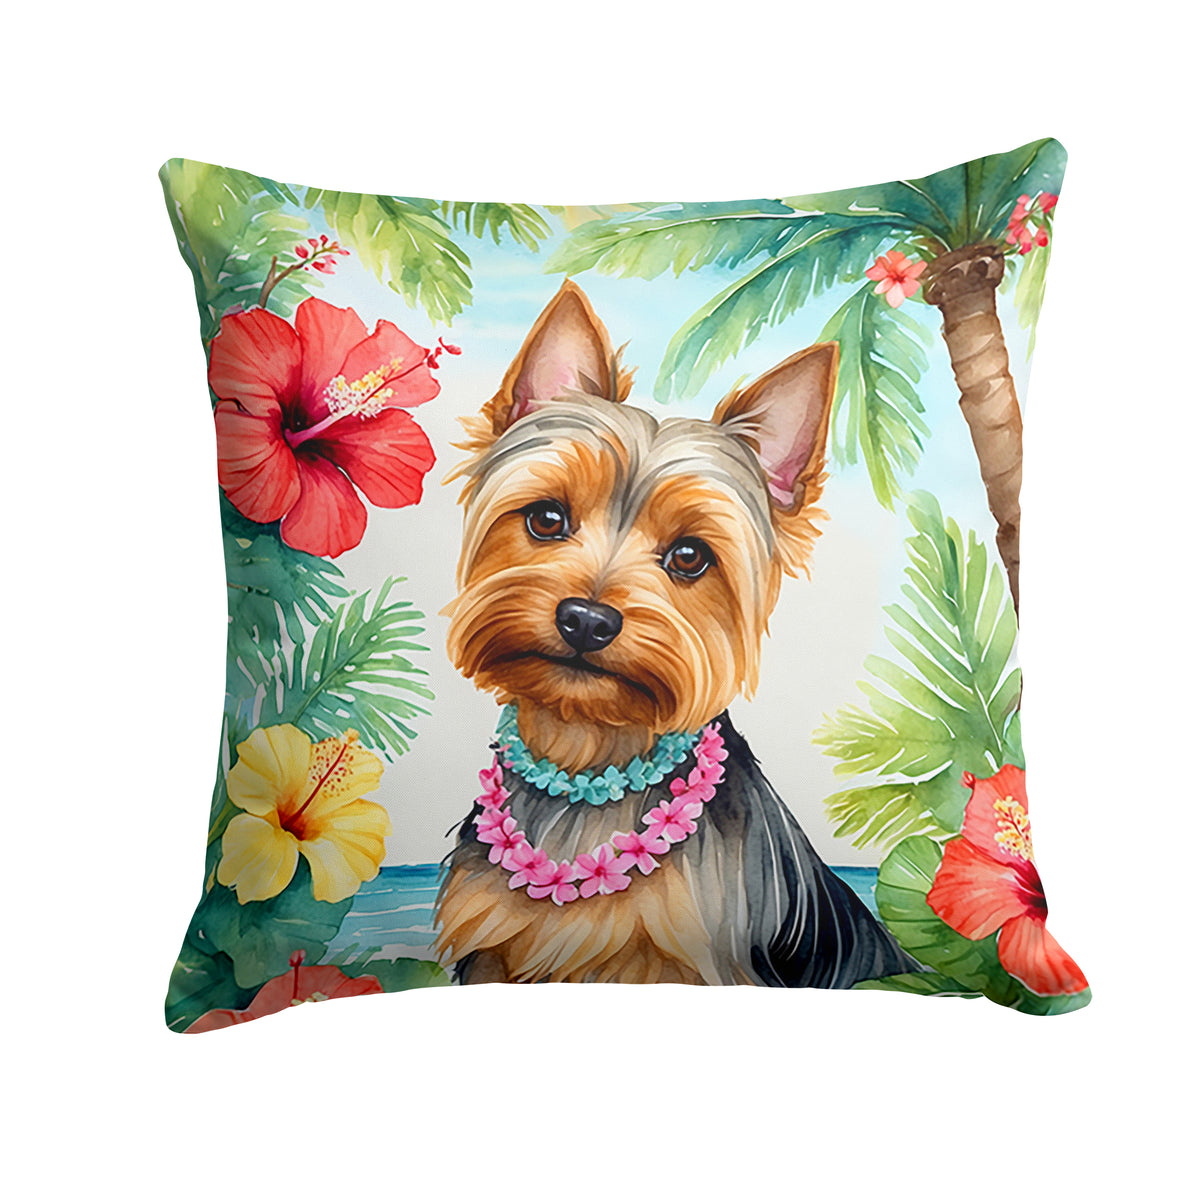 Buy this Silky Terrier Luau Throw Pillow